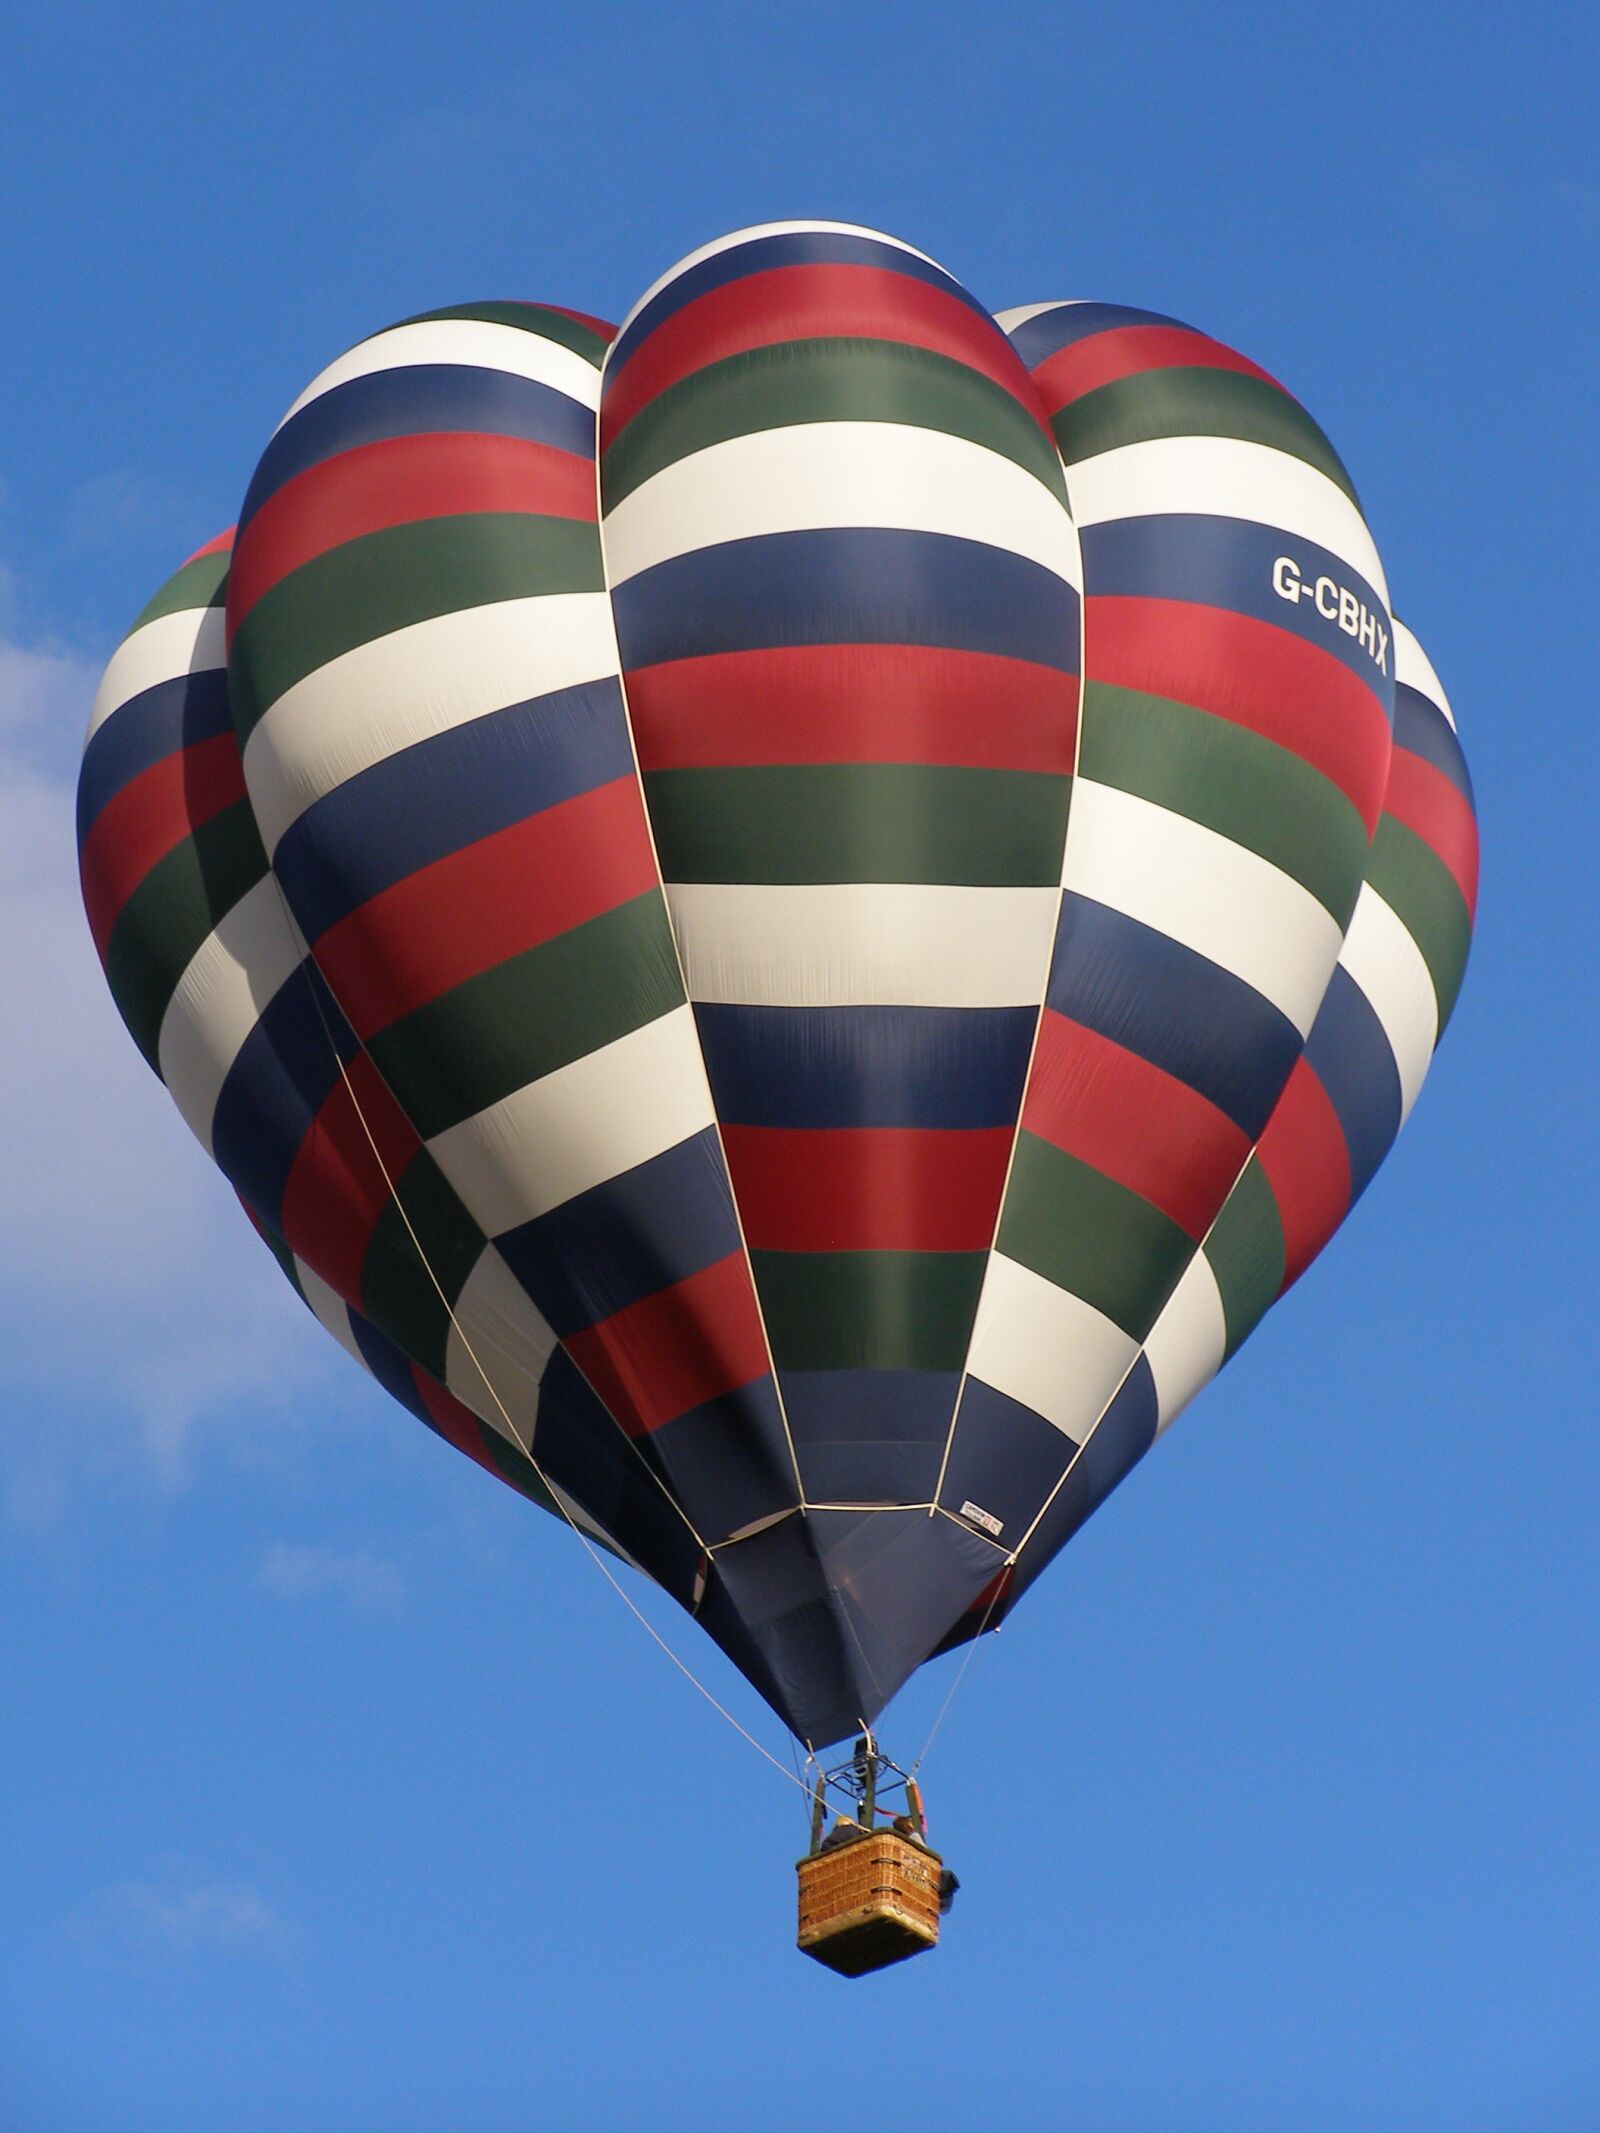 Olympus SP500UZ sample photo. Hot air ballon, flying photography